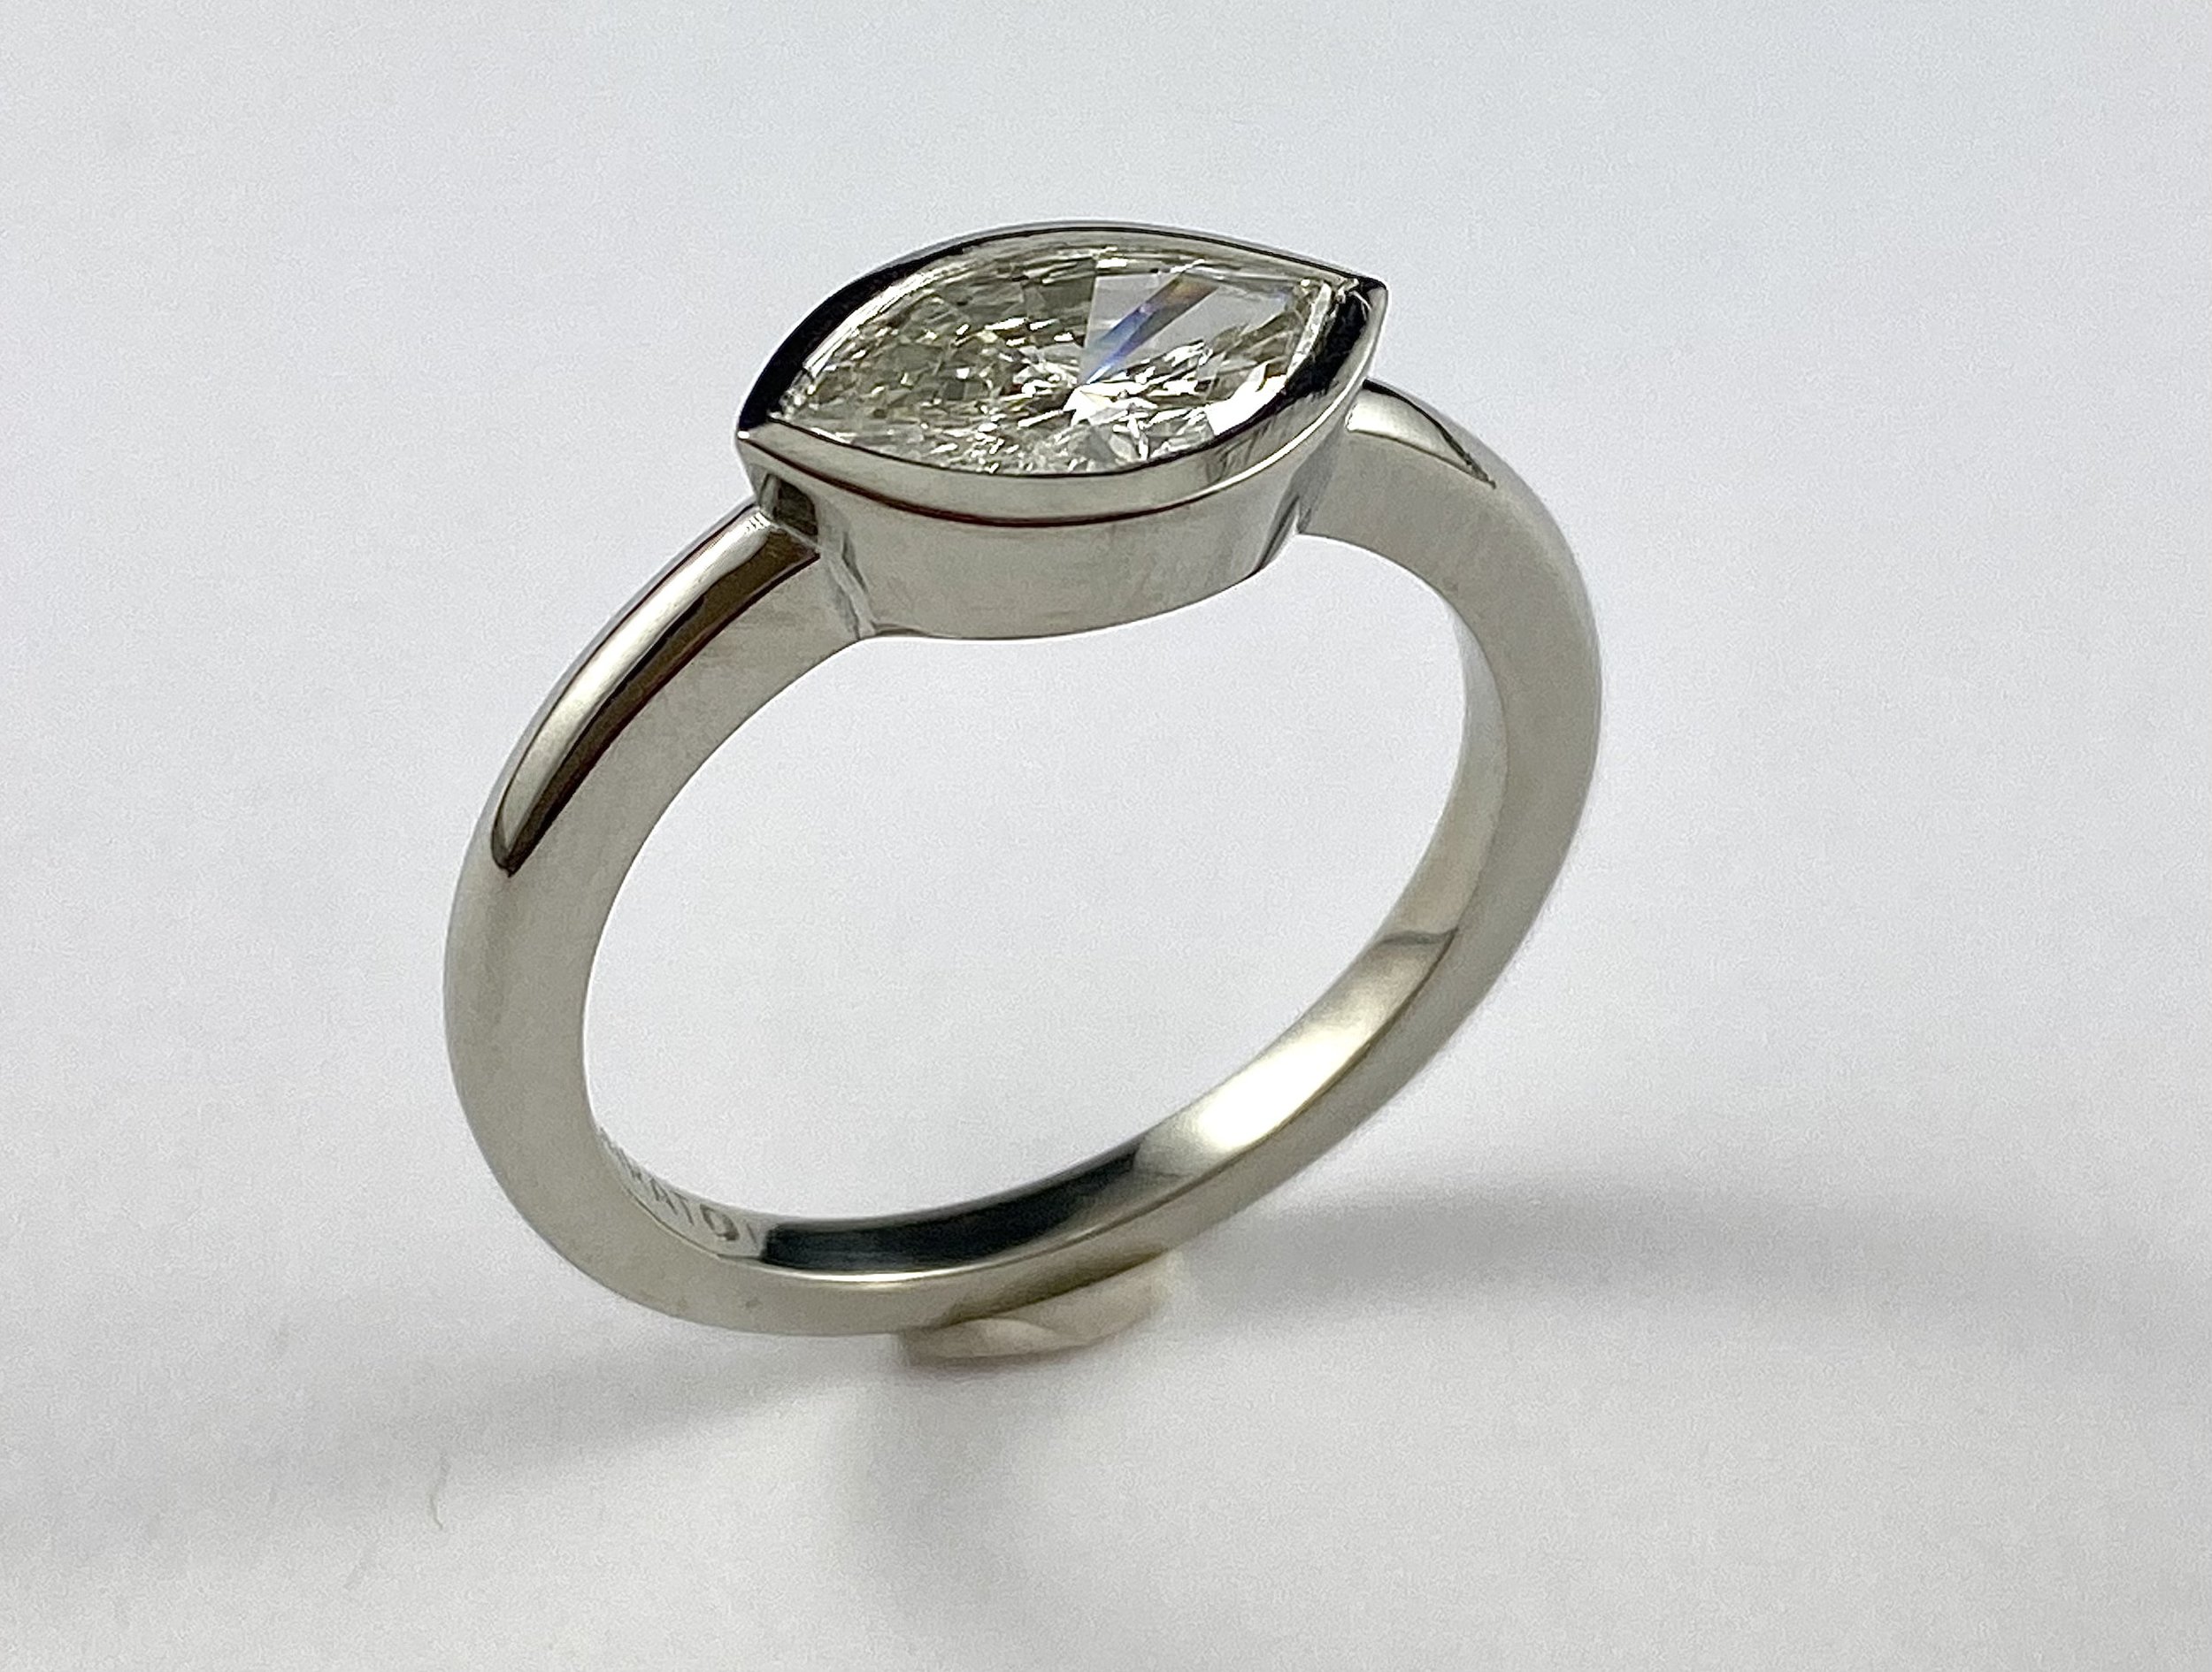 19K White Gold Marquise Diamond Ring